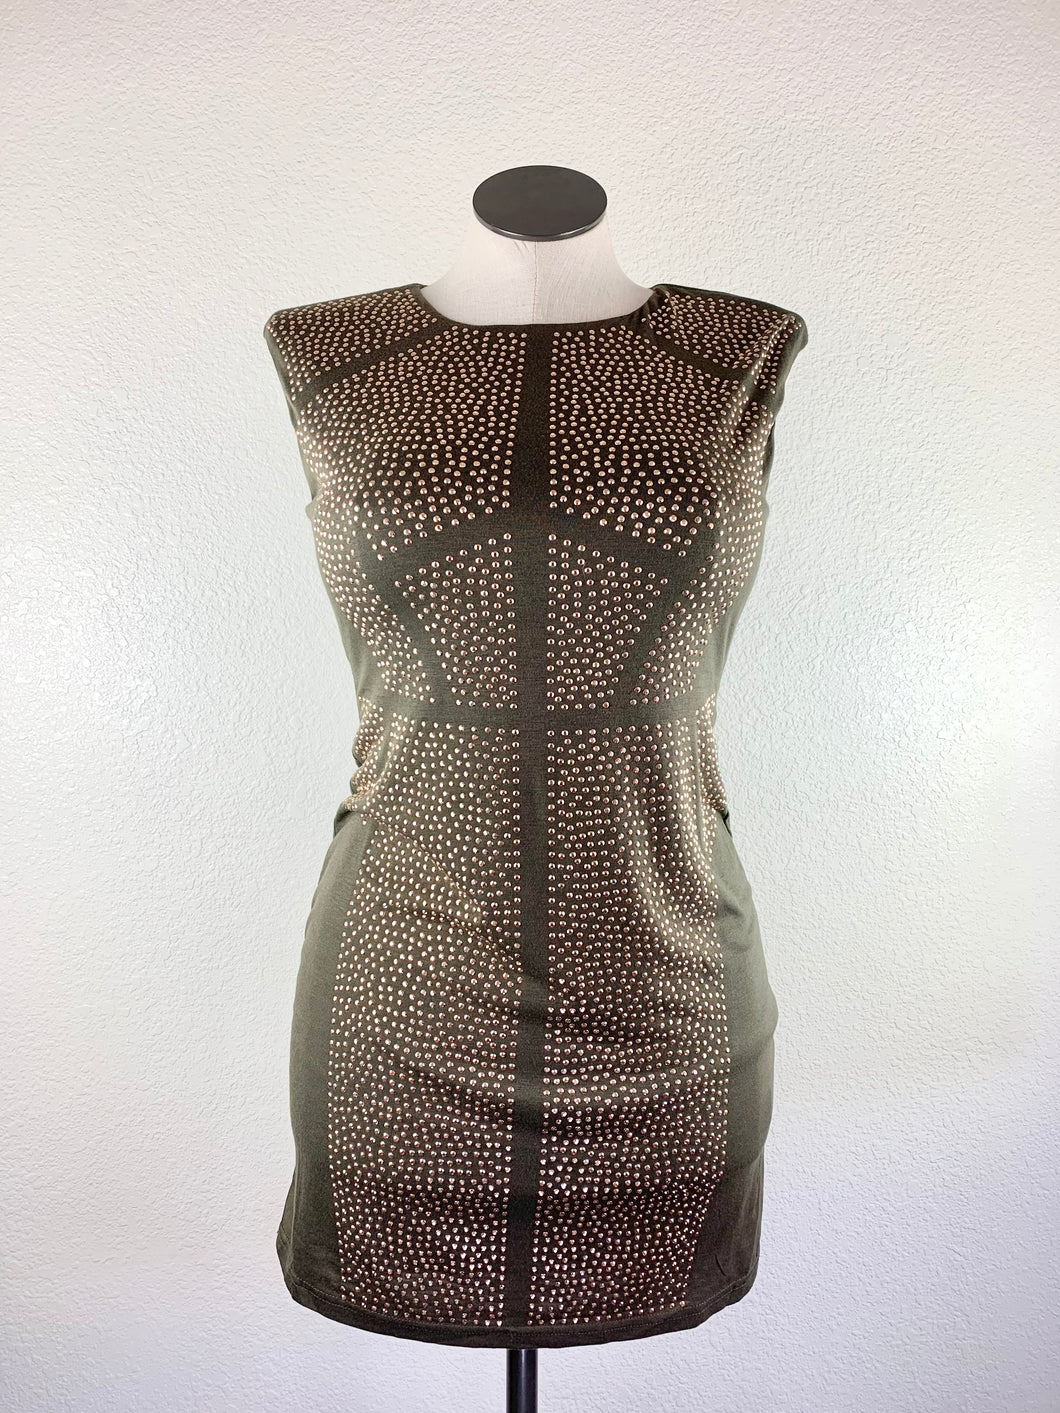 Ark & Co Studded Mini Dress size L